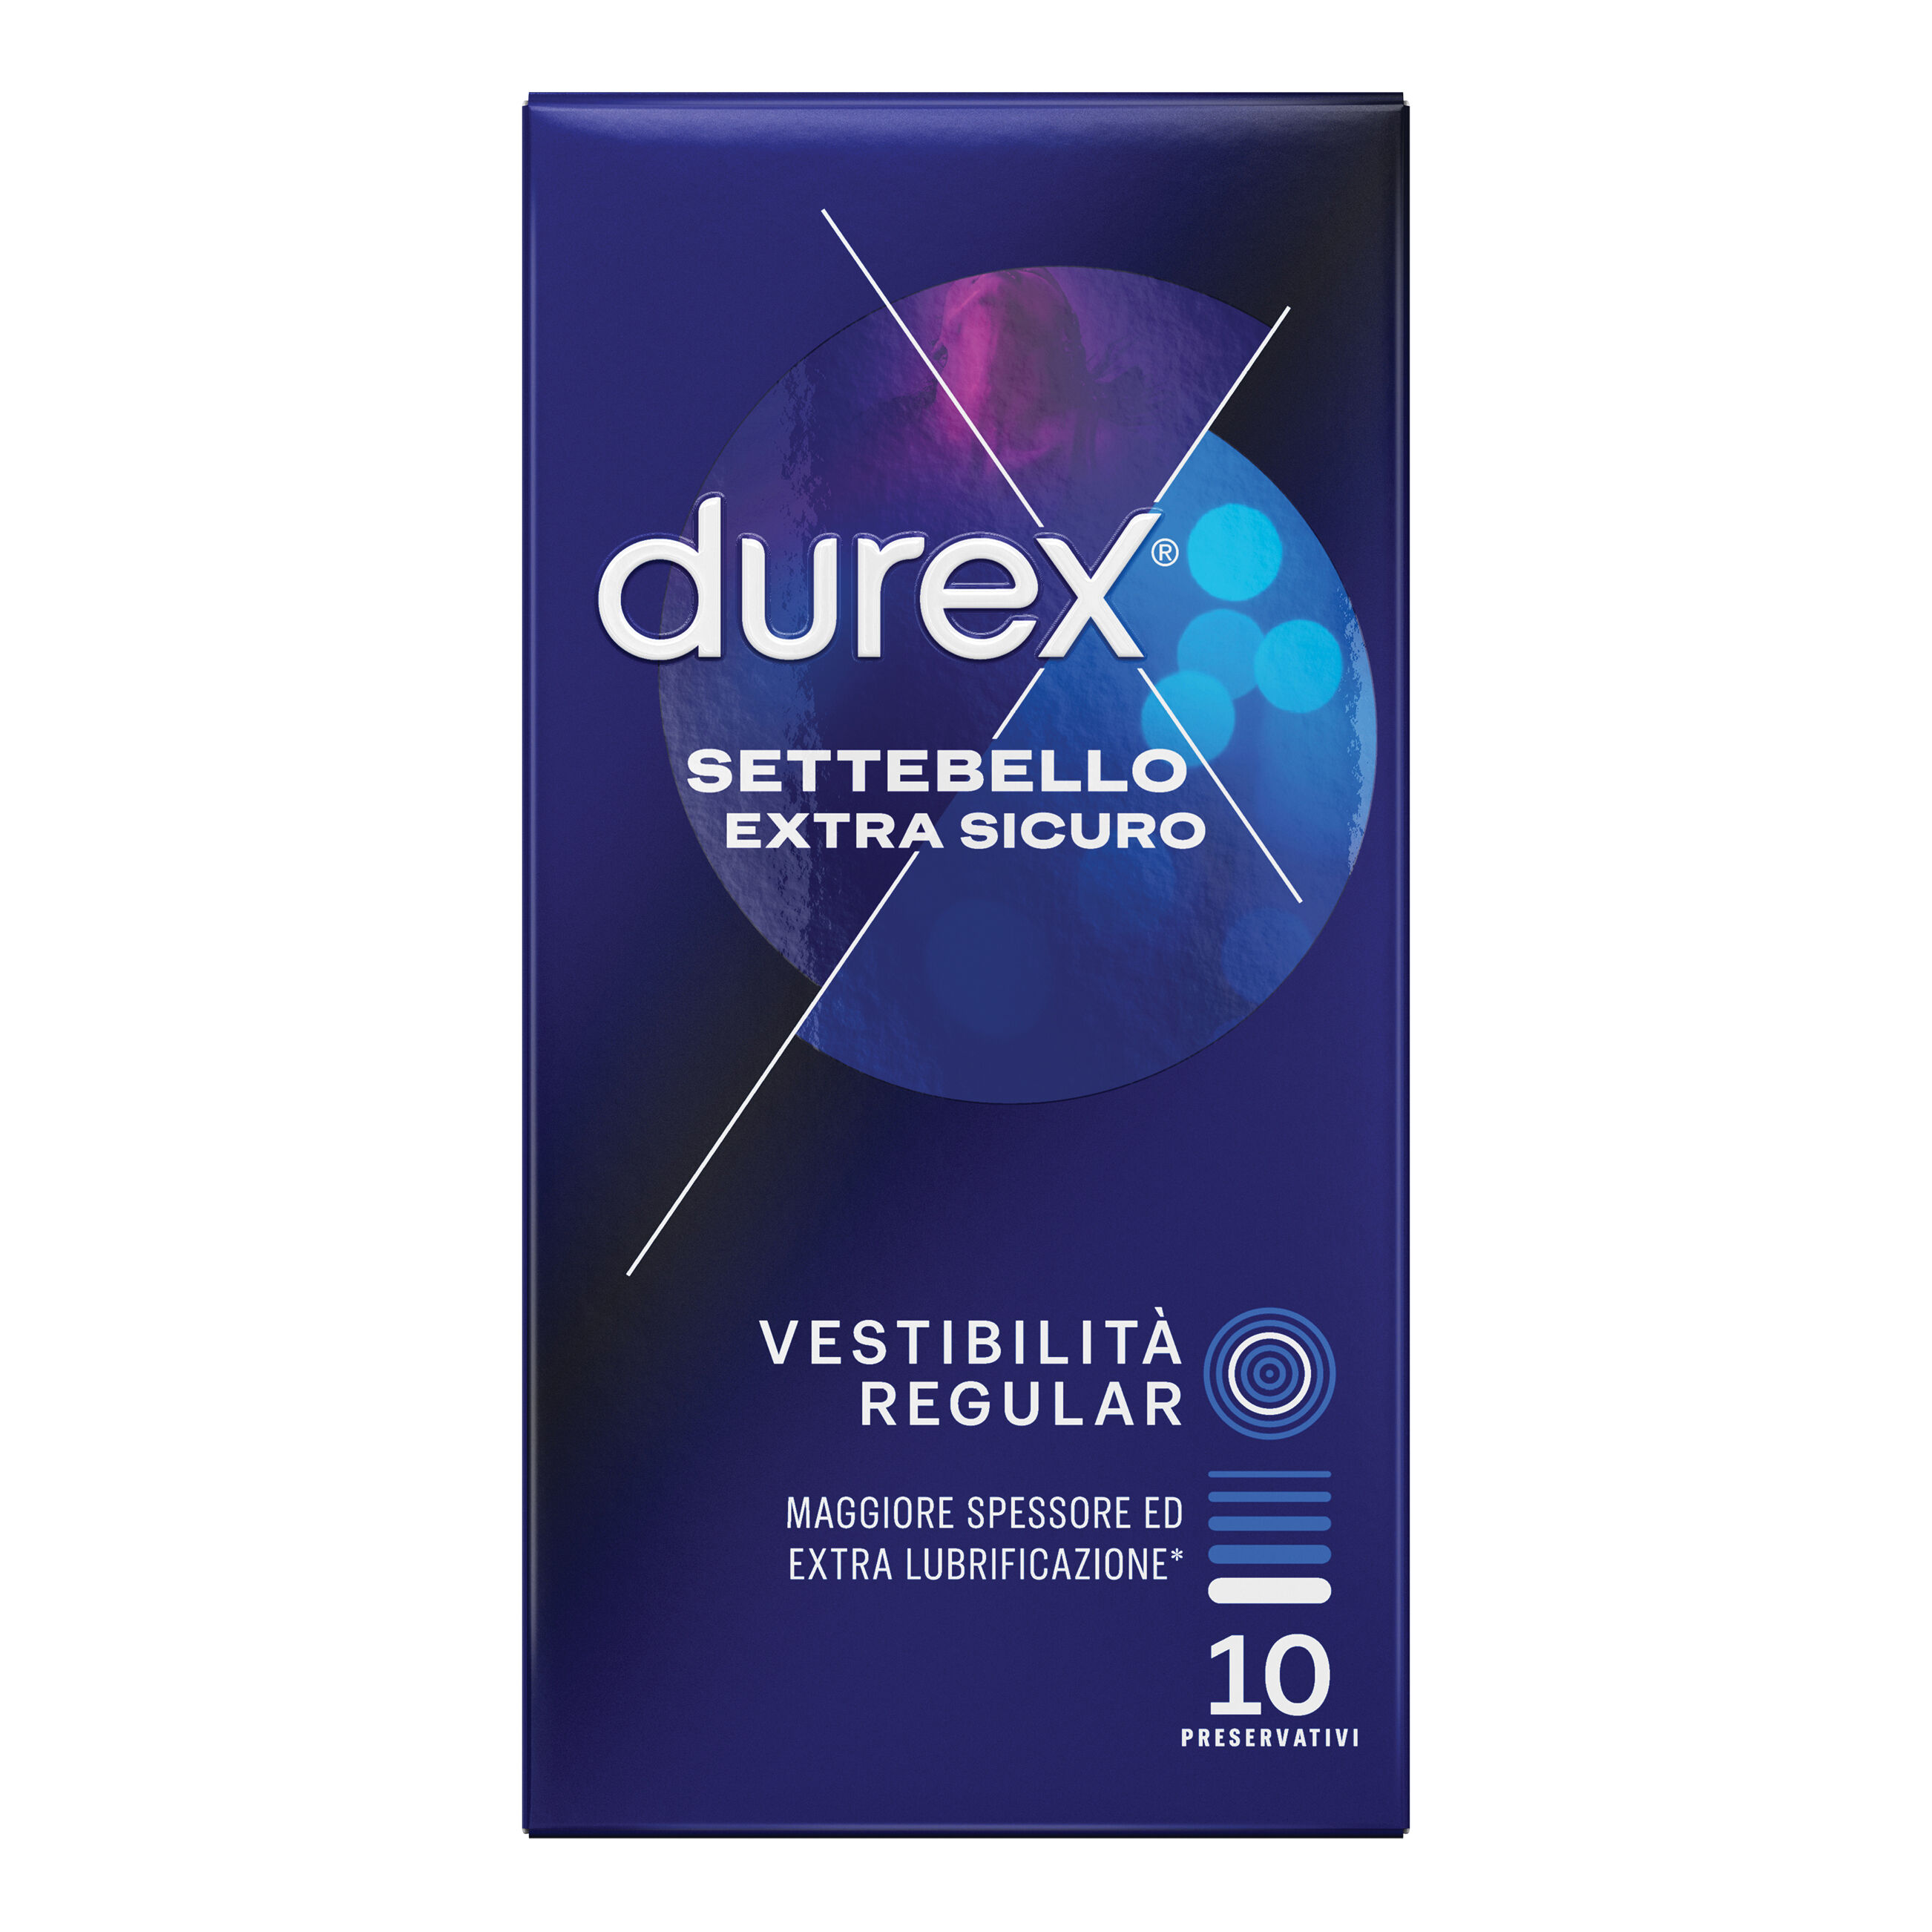 Durex Profilattico settebello extra sicuro 10 pezzi